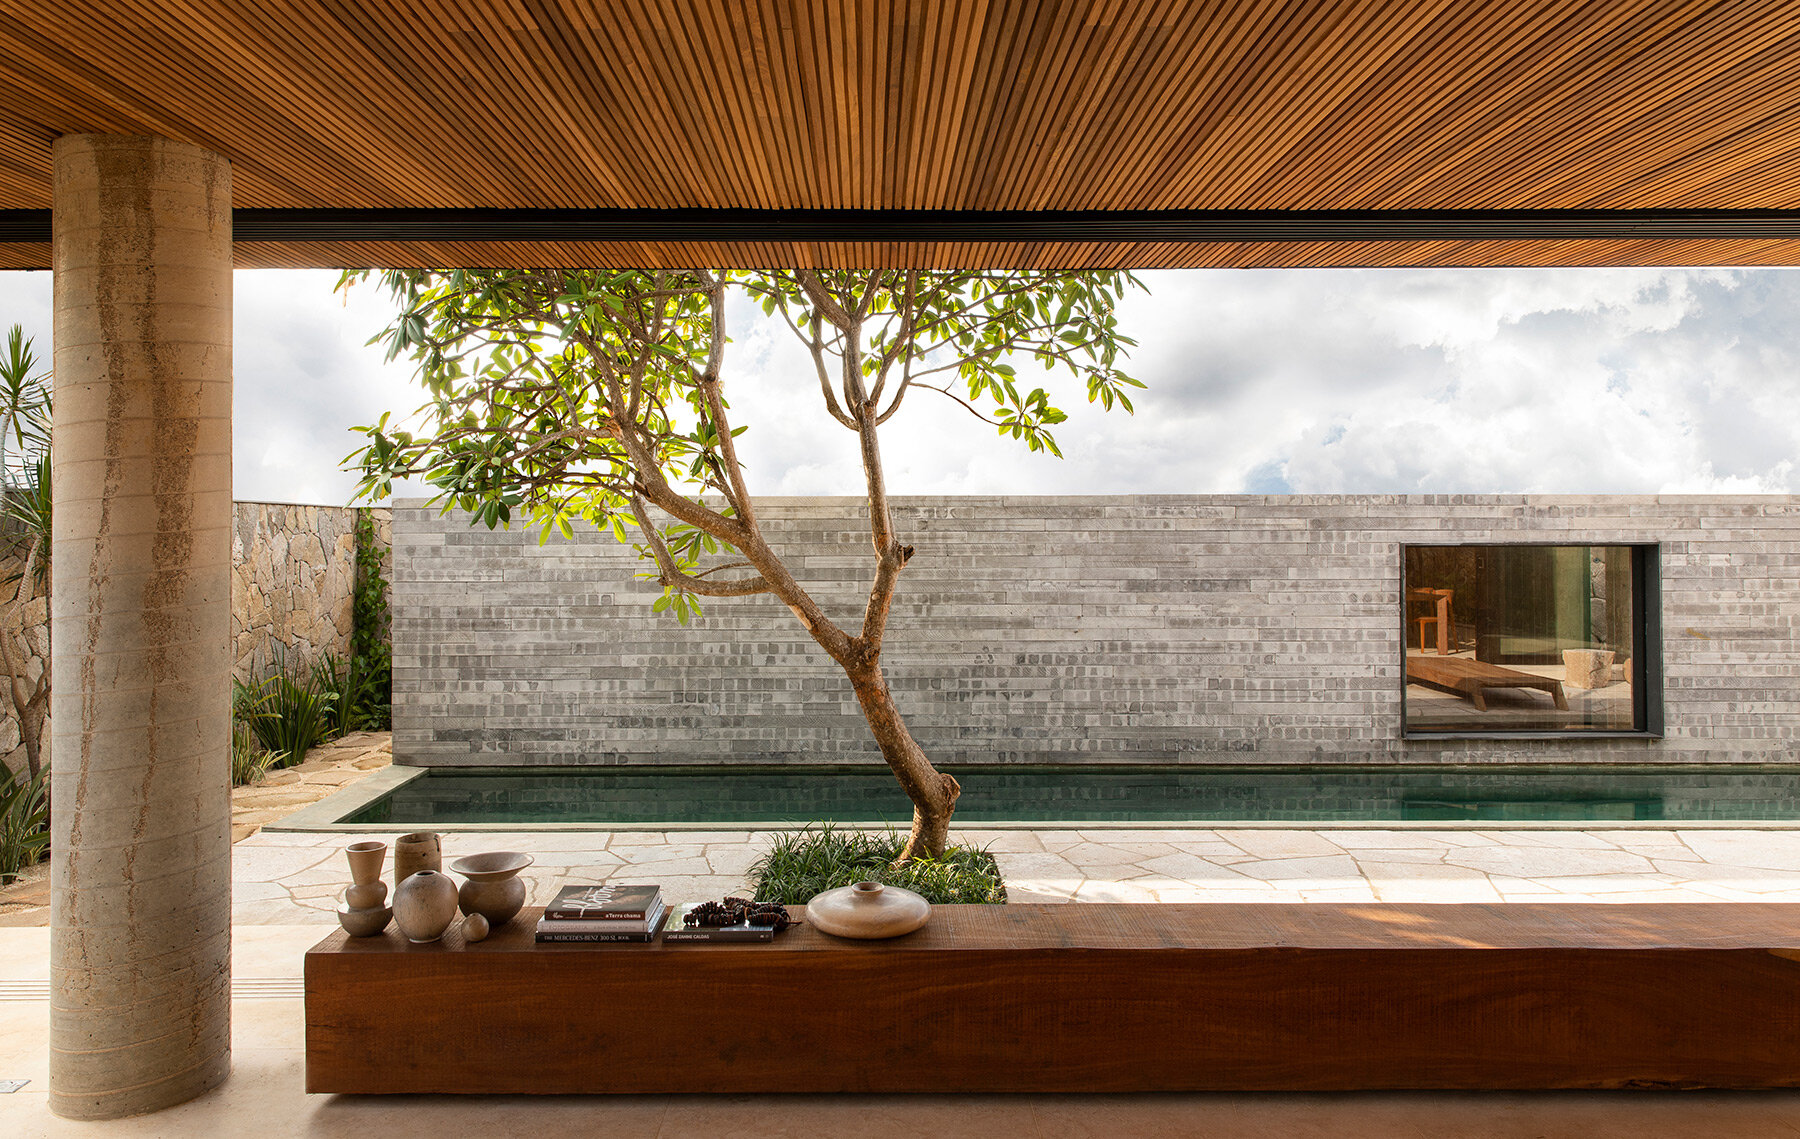 mf+arquitetos completes Q04L63 house in rifaina, brazil